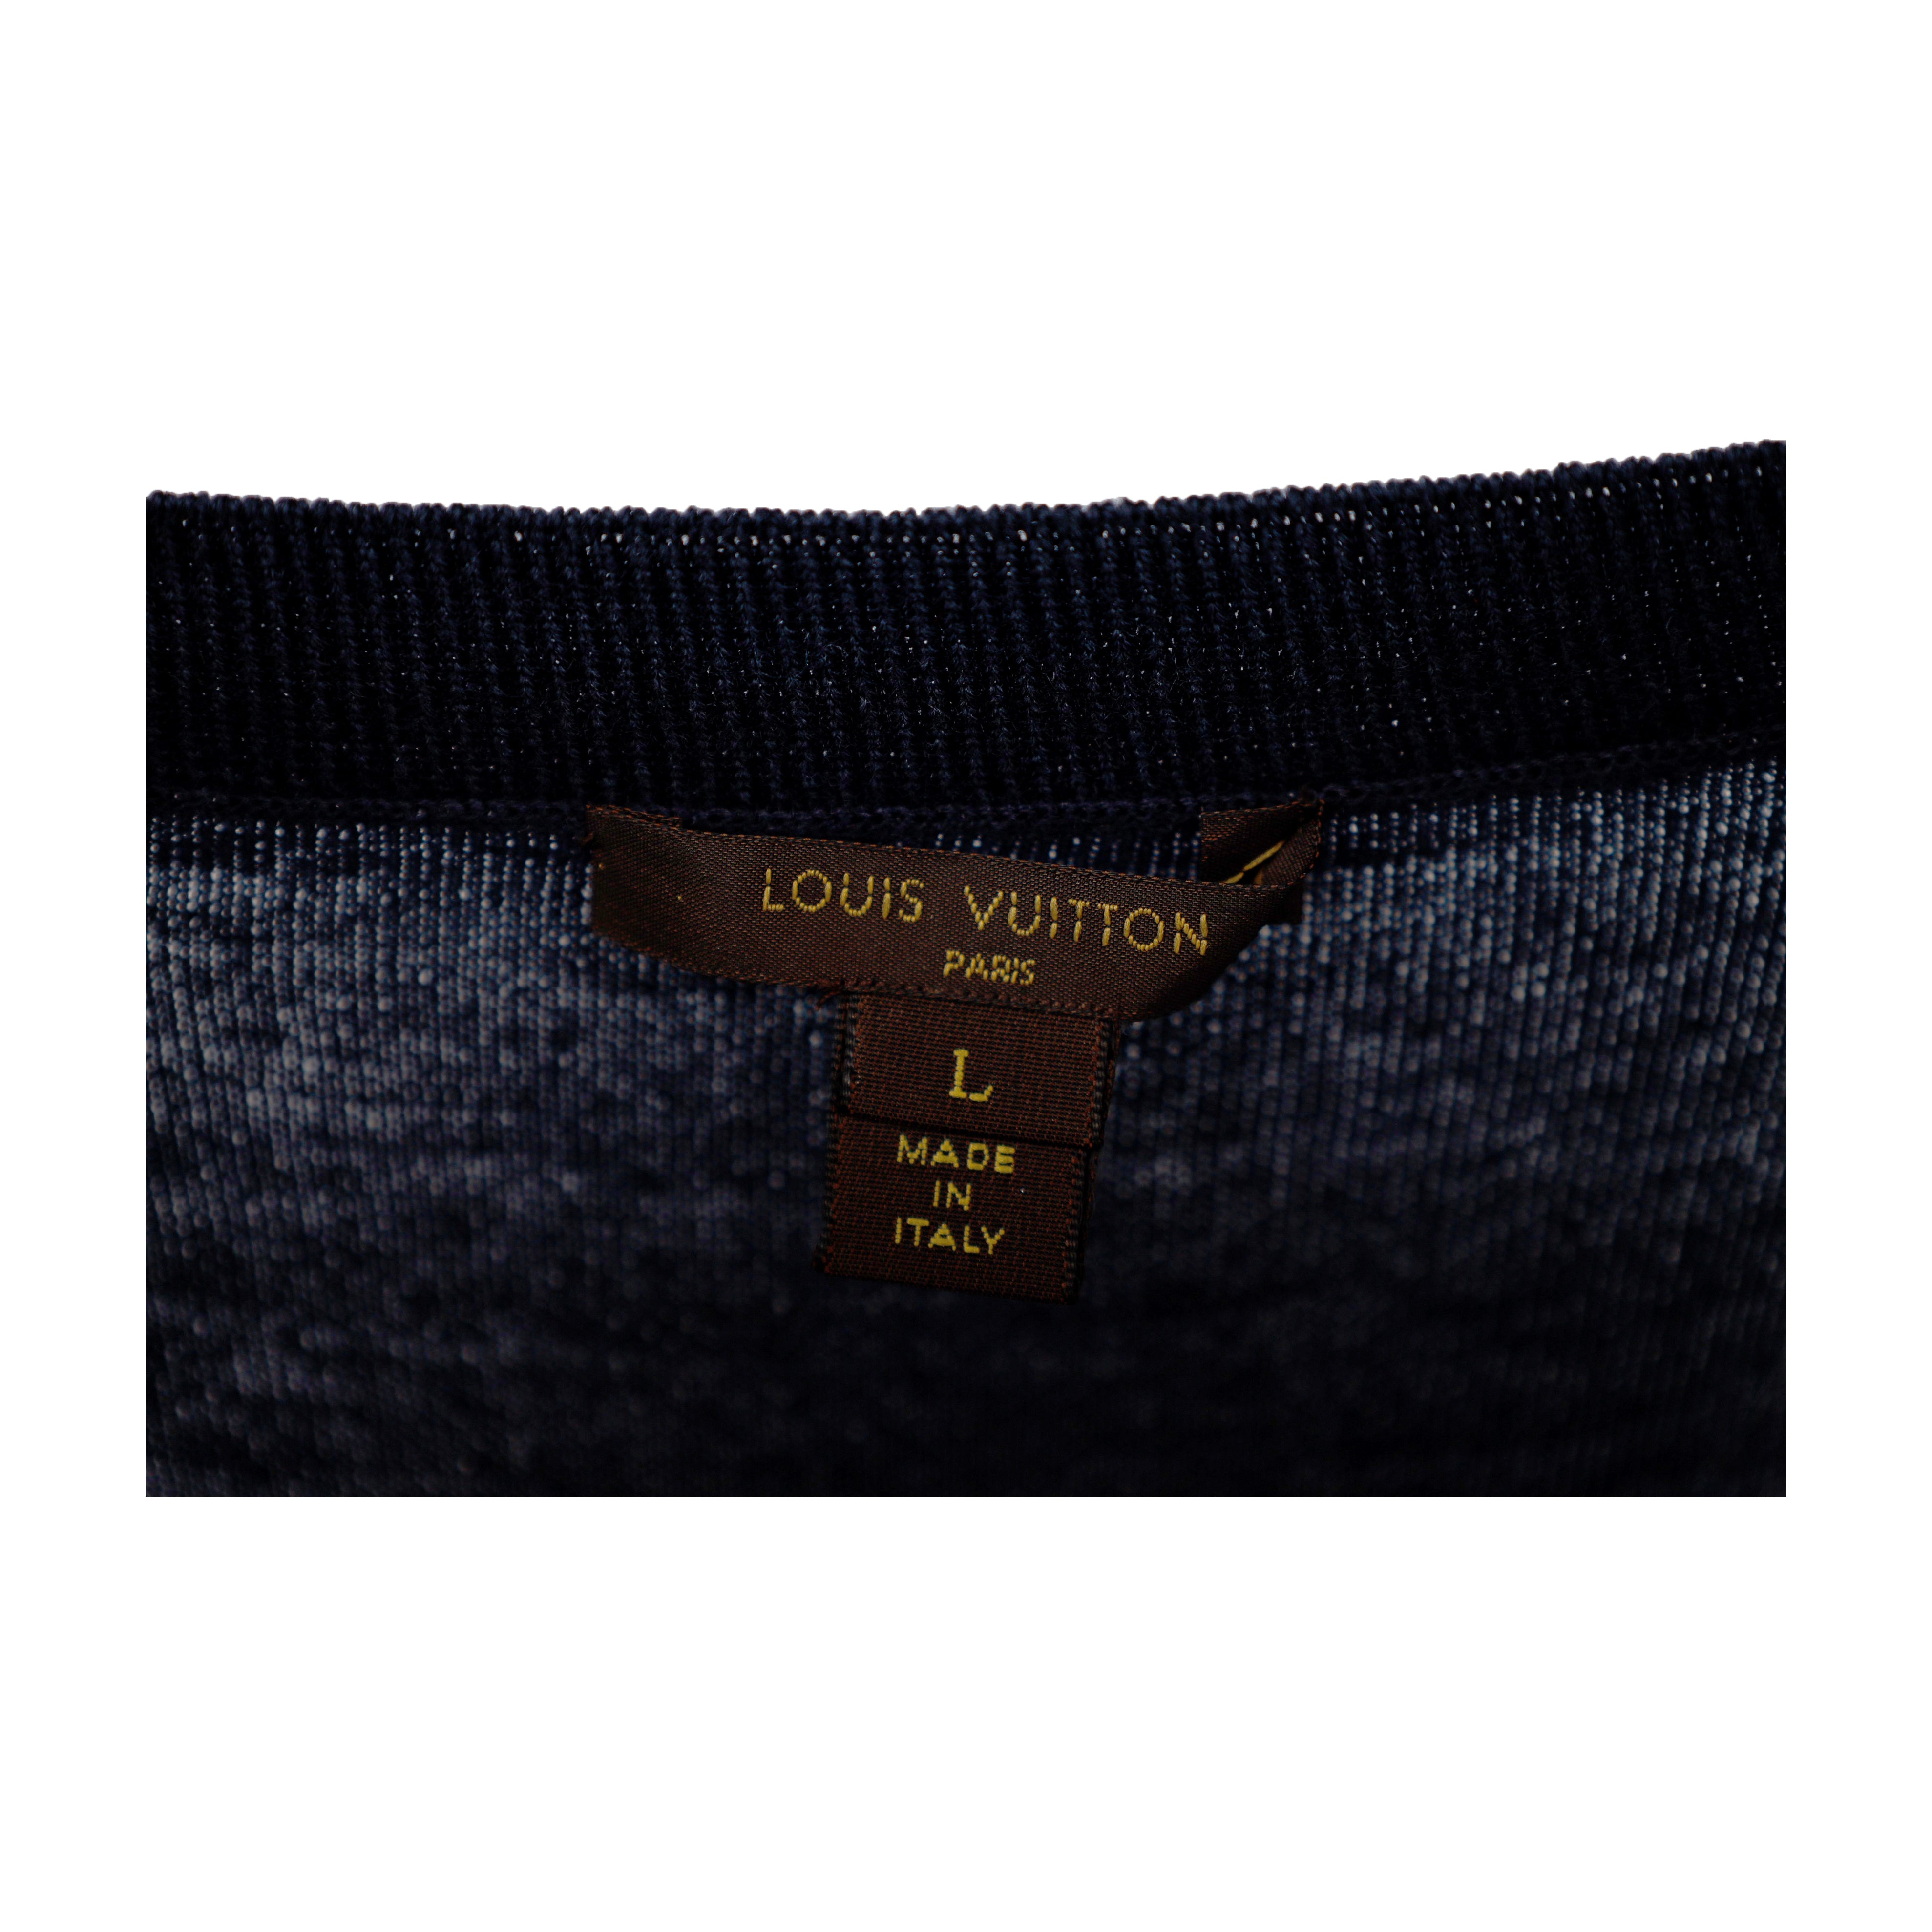 Louis Vuitton Navy Blue Wool & Sequin Embellished Monogram Detailed Dress  XS Louis Vuitton